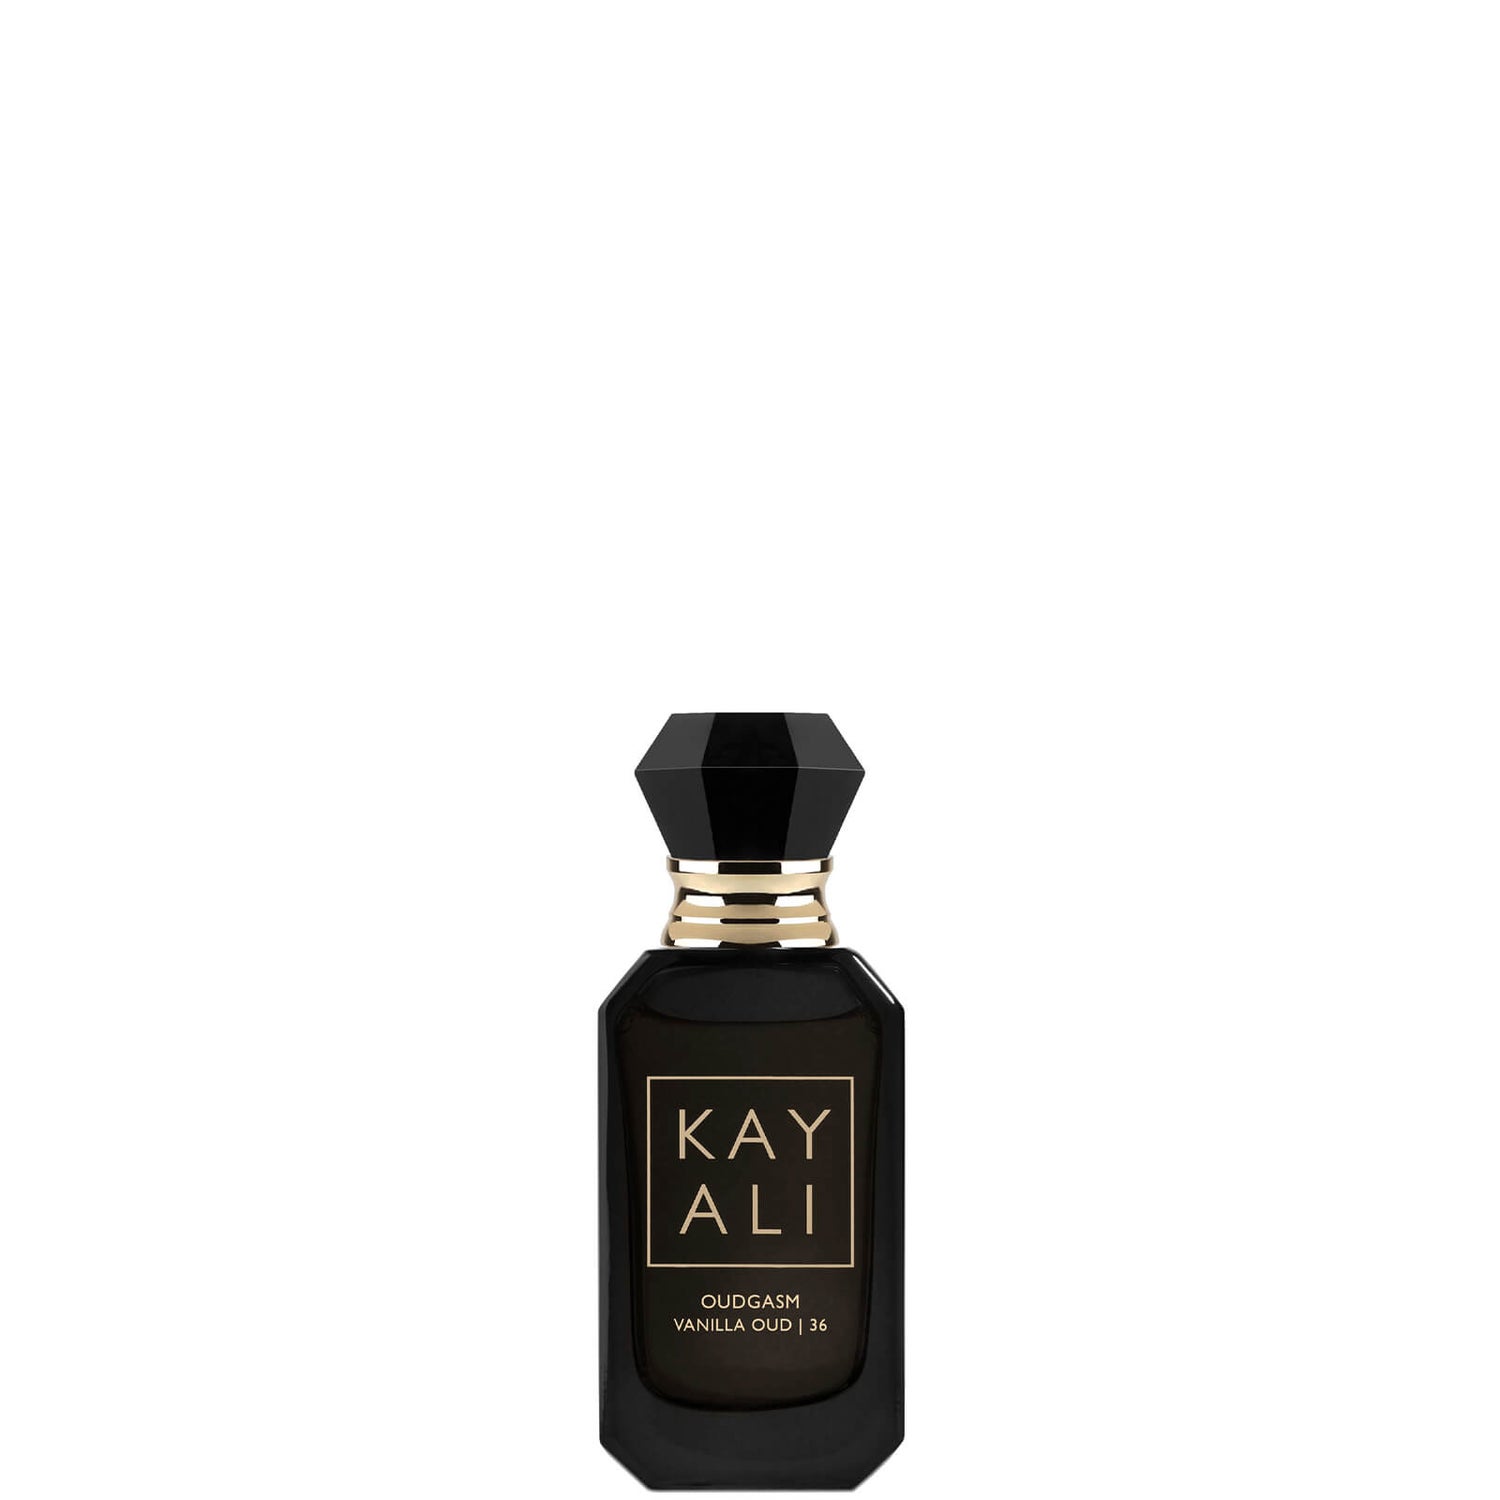 KAYALI Oudgasm Vanilla Oud 36 Eau de Parfum 10ml